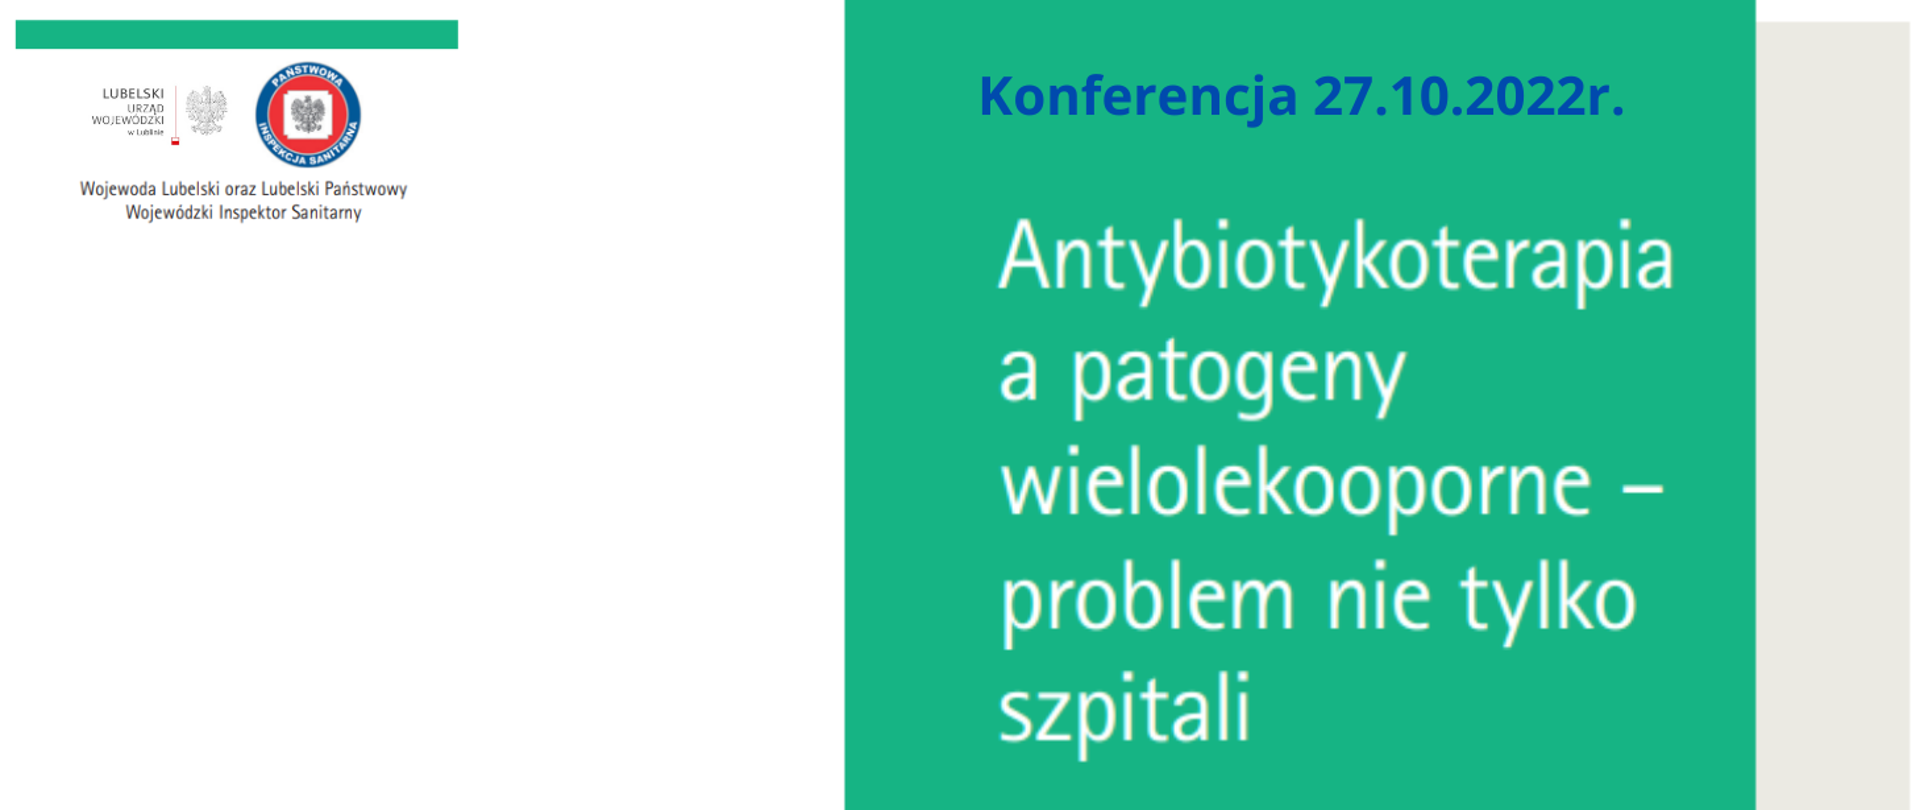 Antybiotykoterapia a patogeny wielolekooporne-konferencja